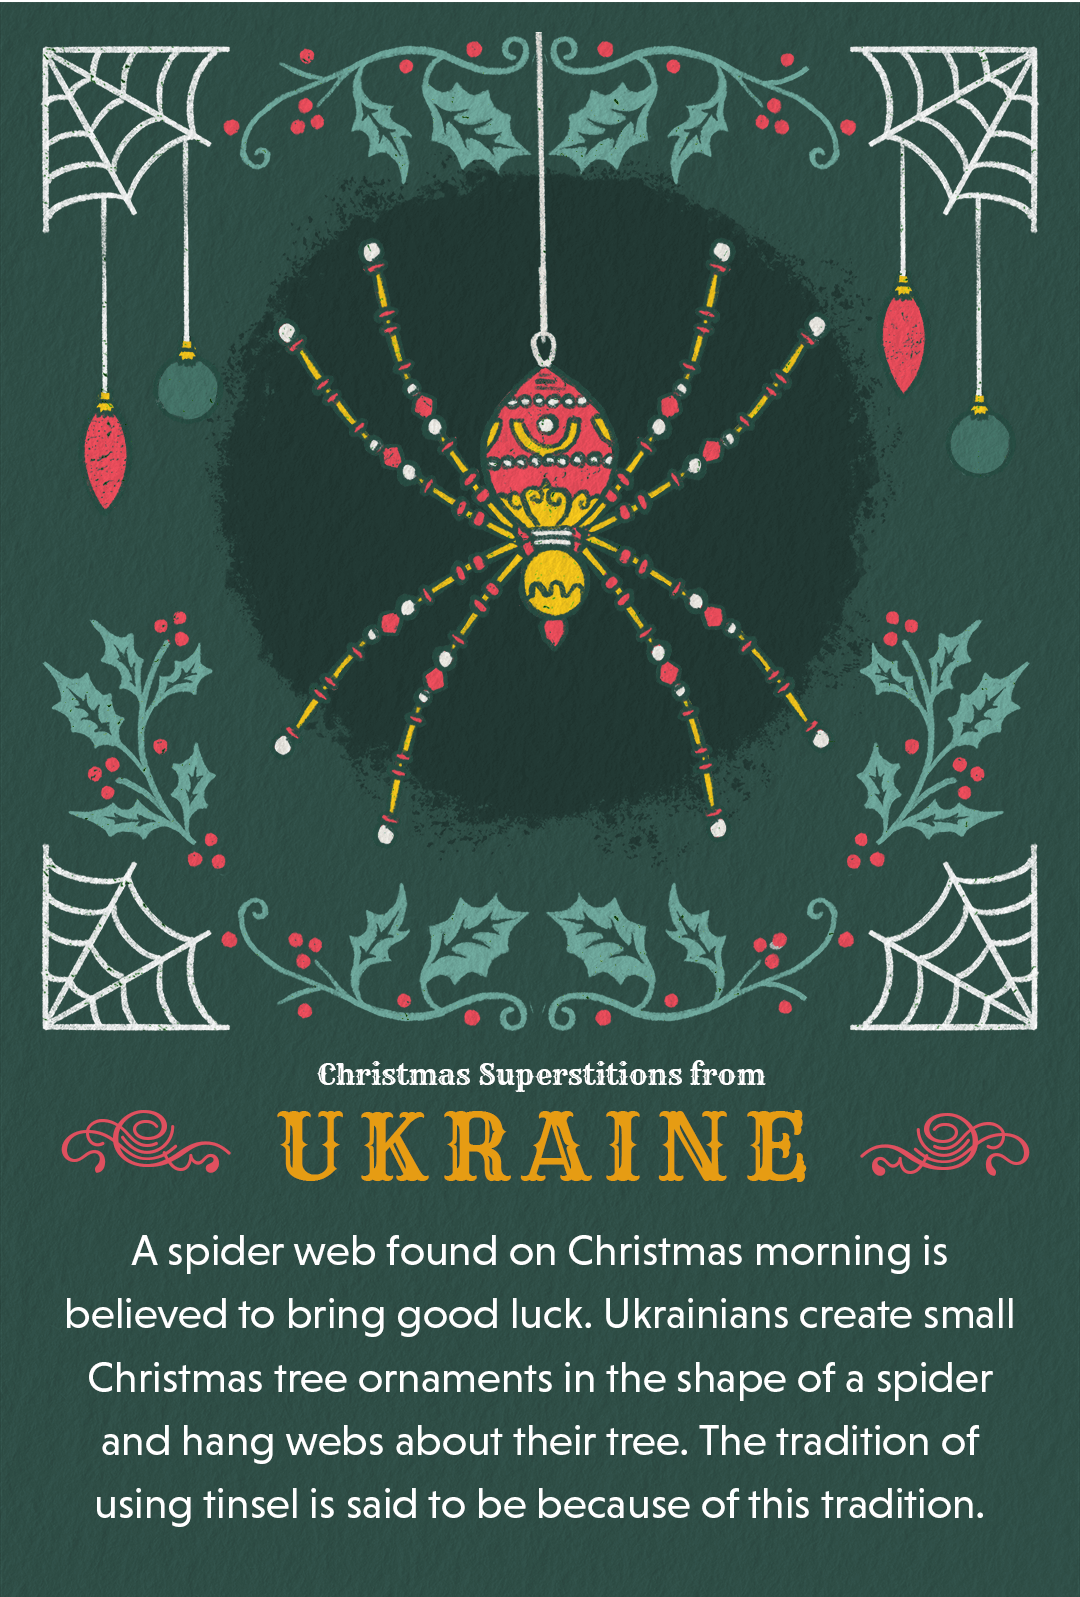 Unusual Christmas folklore from Ukraine